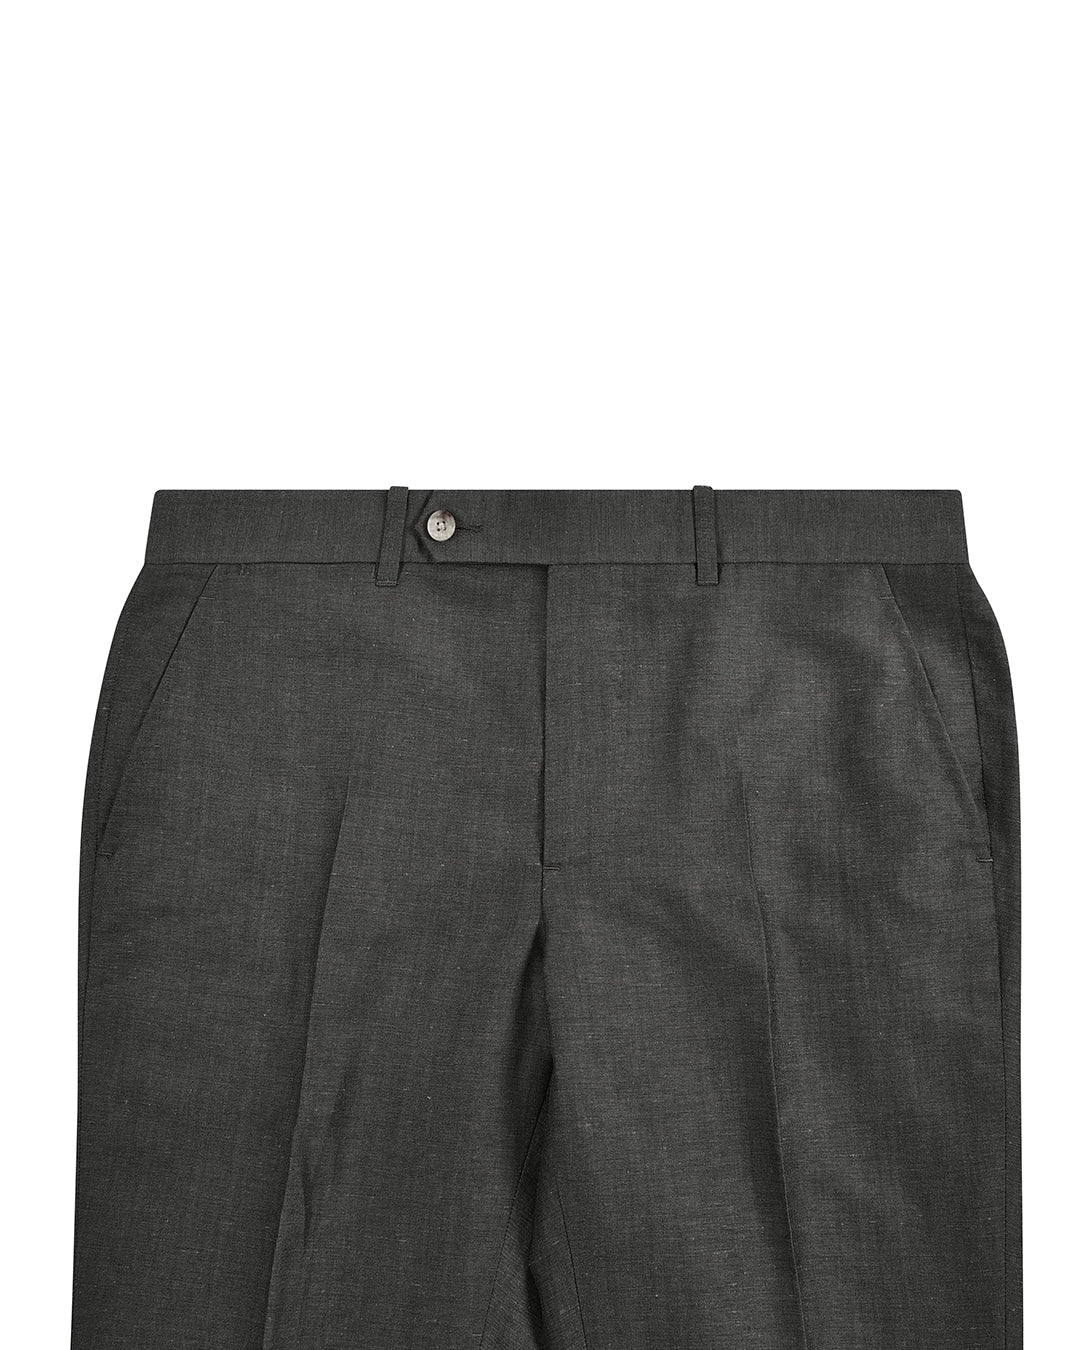 Vitale Barberis Canonico -  Dark Grey Wool Linen Dress Pant